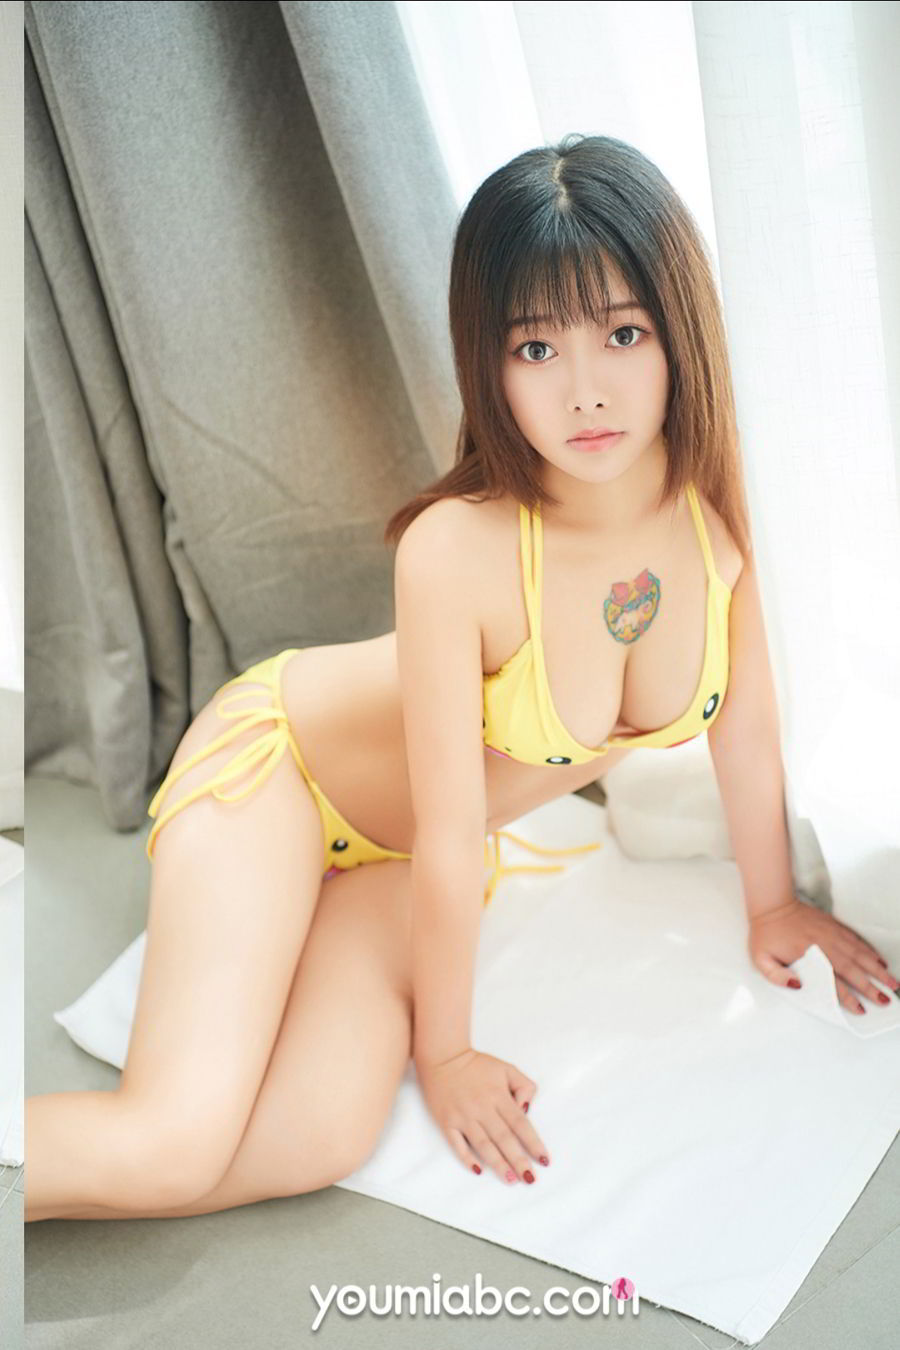 [Youmei] Vol.178 Cute Girl